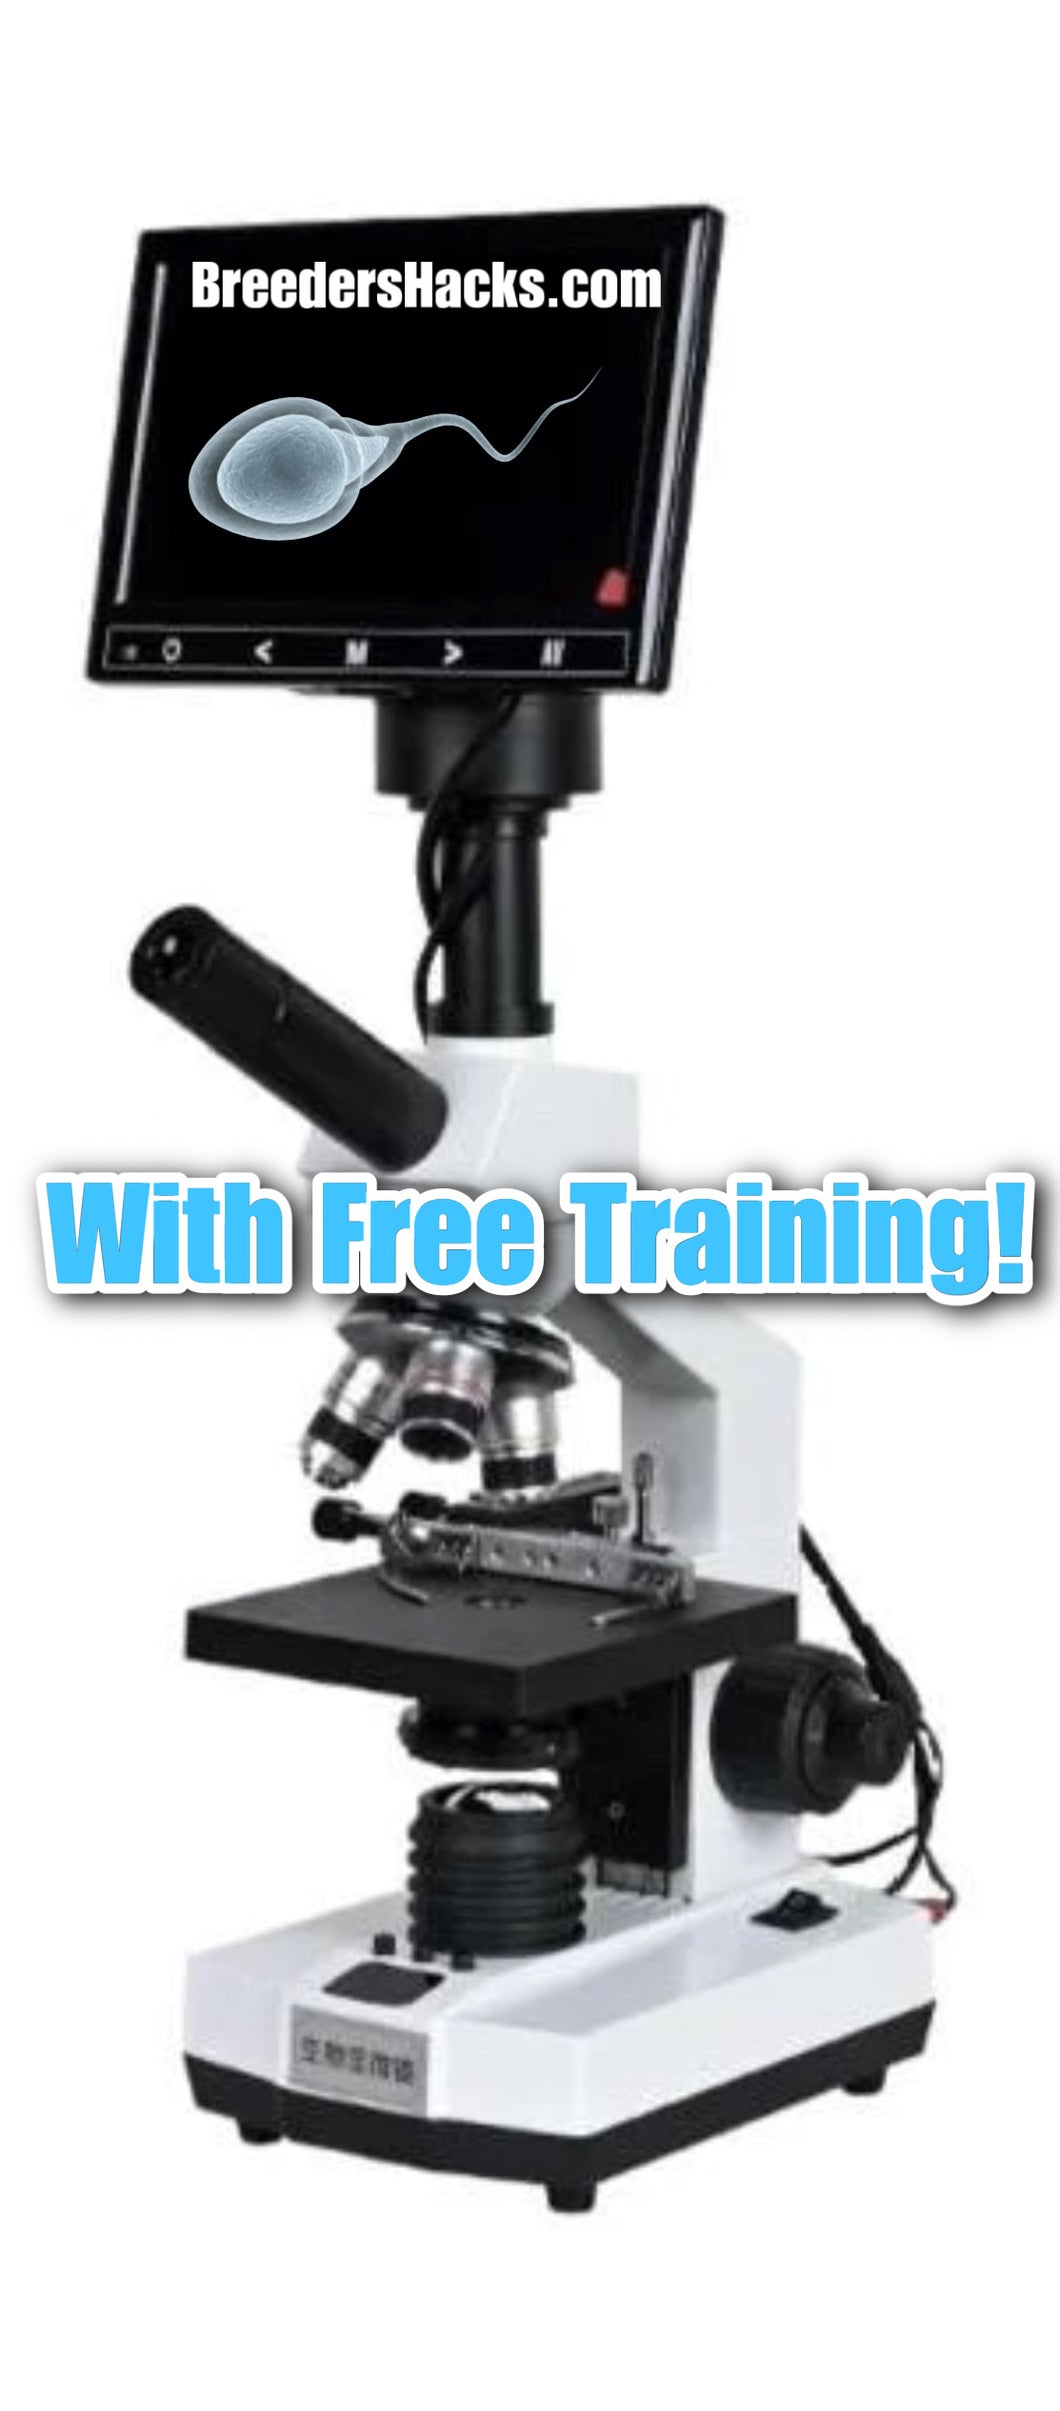 *Veterinary Grade* canine semen analysis microscope With FREE TRAINING